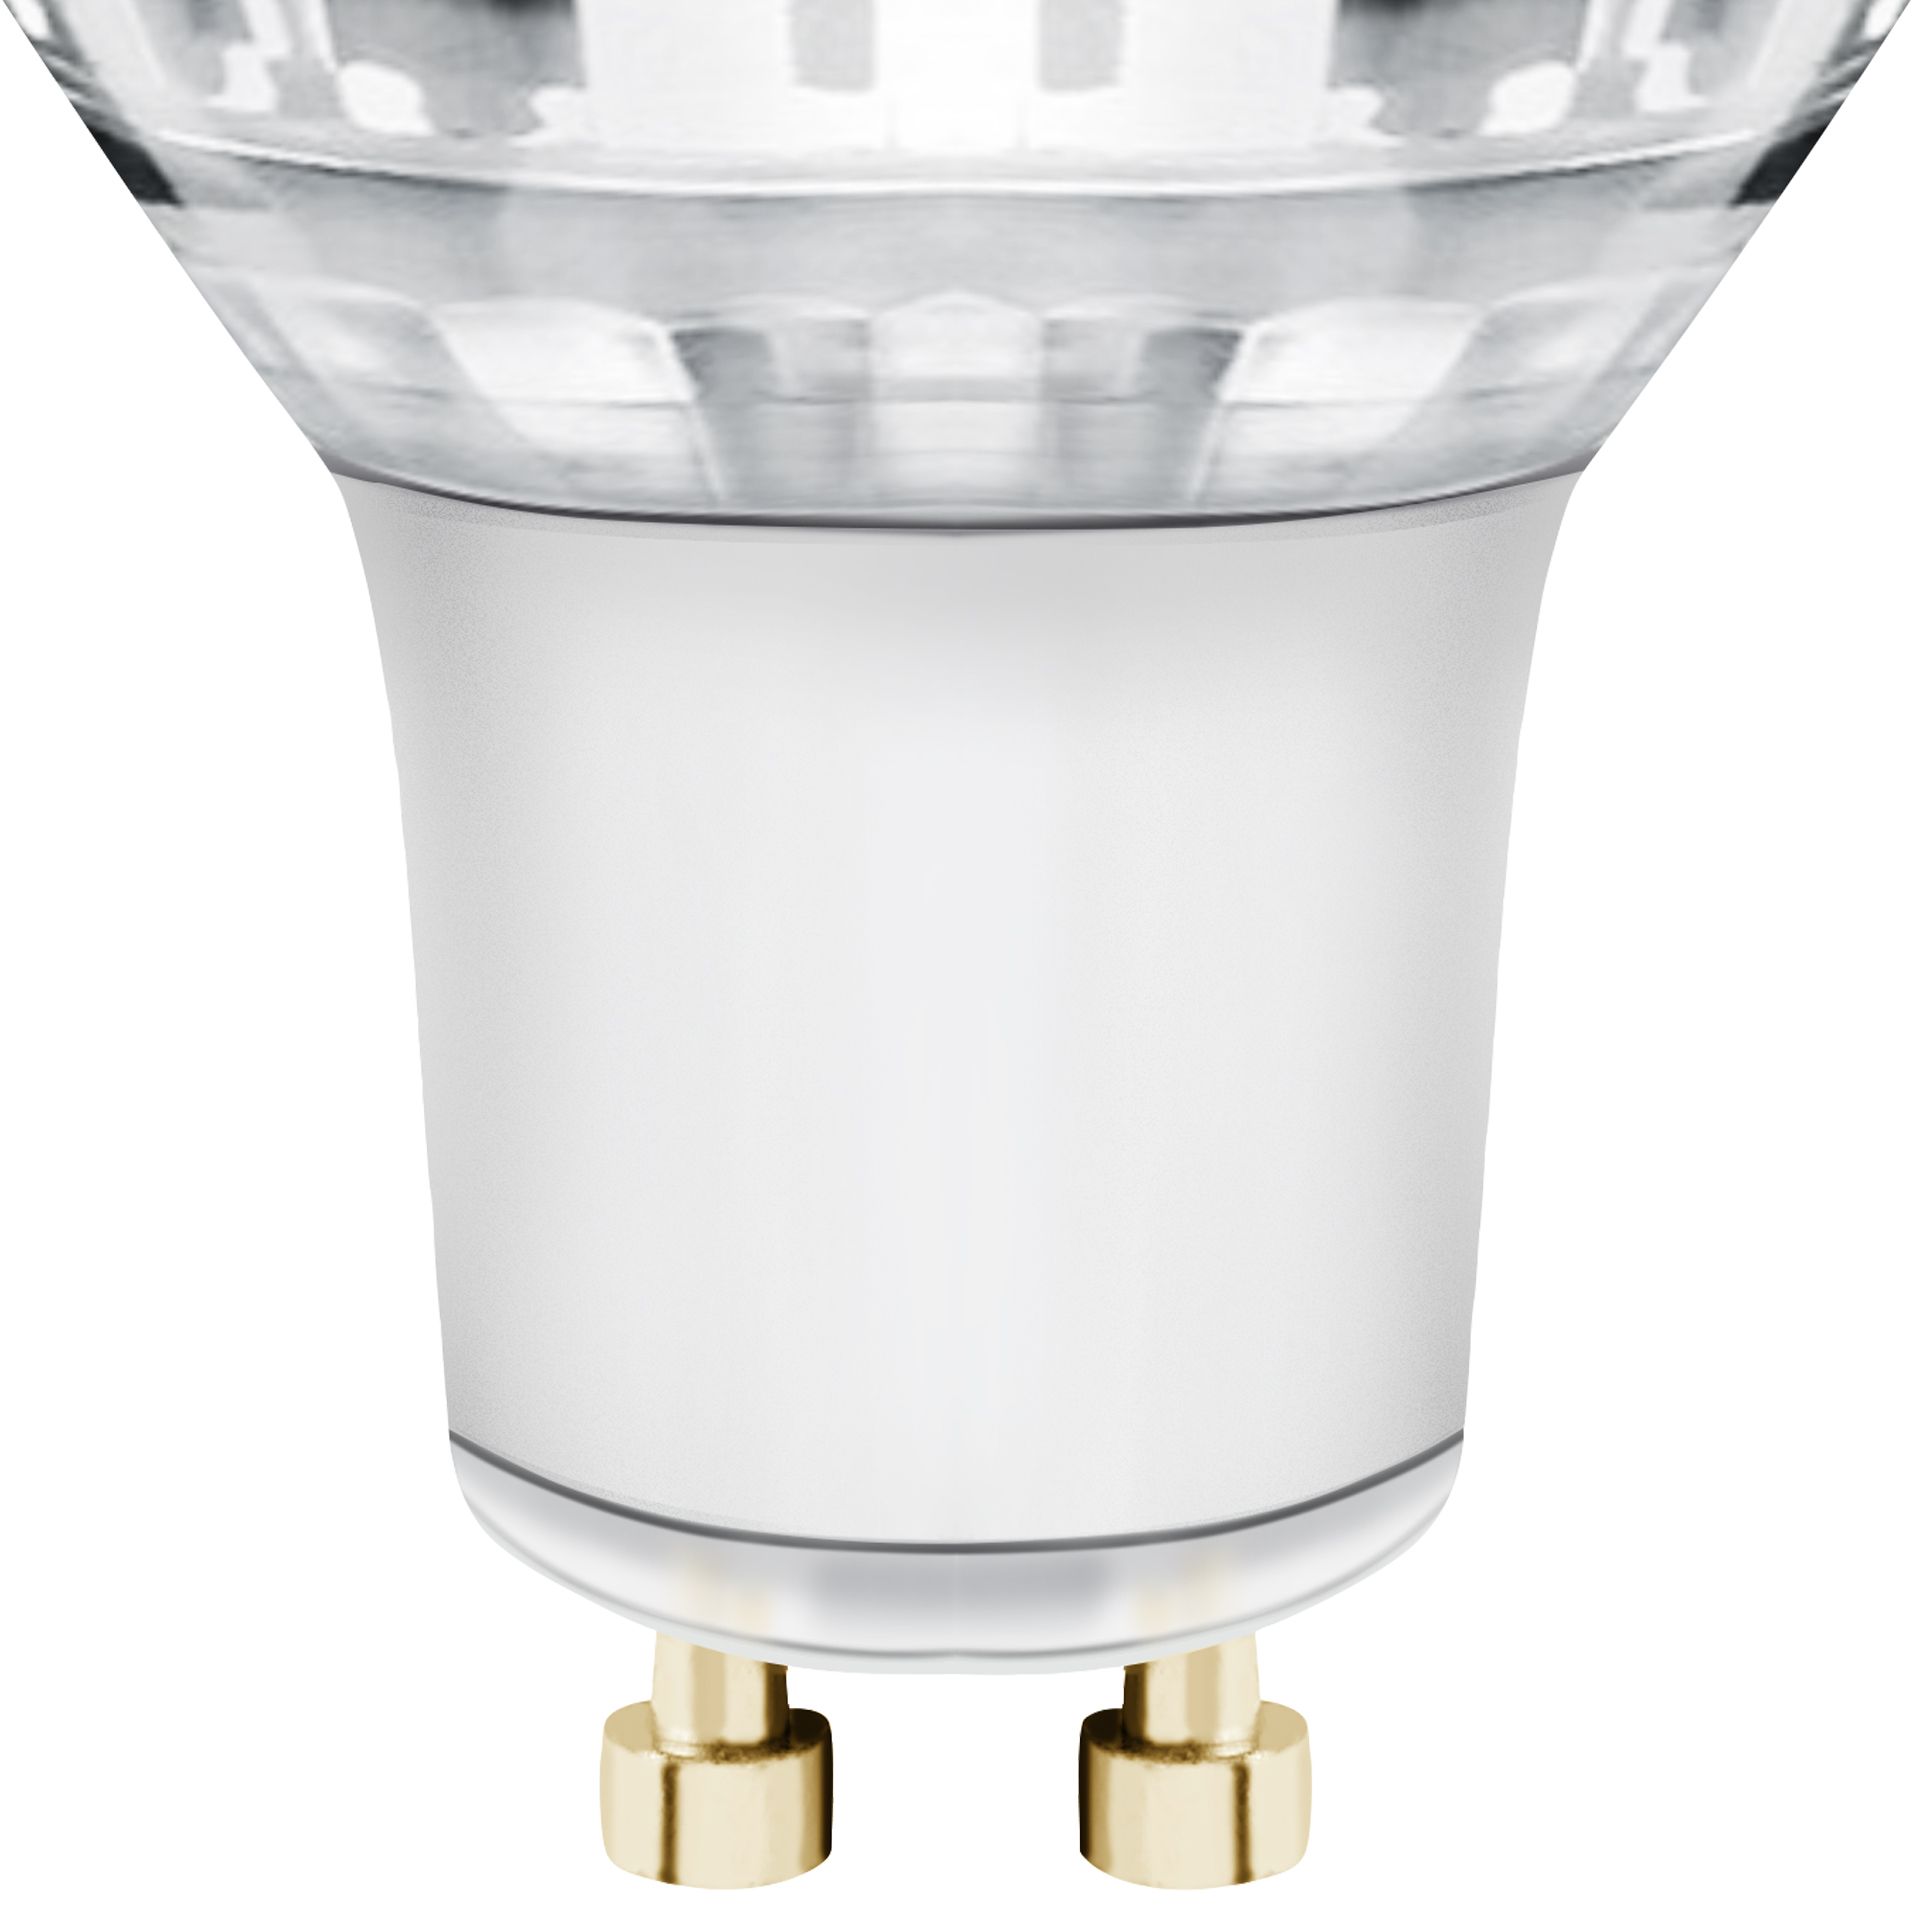 Diall GU10 2.4W 230lm Clear Reflector spot Warm white LED Light bulb